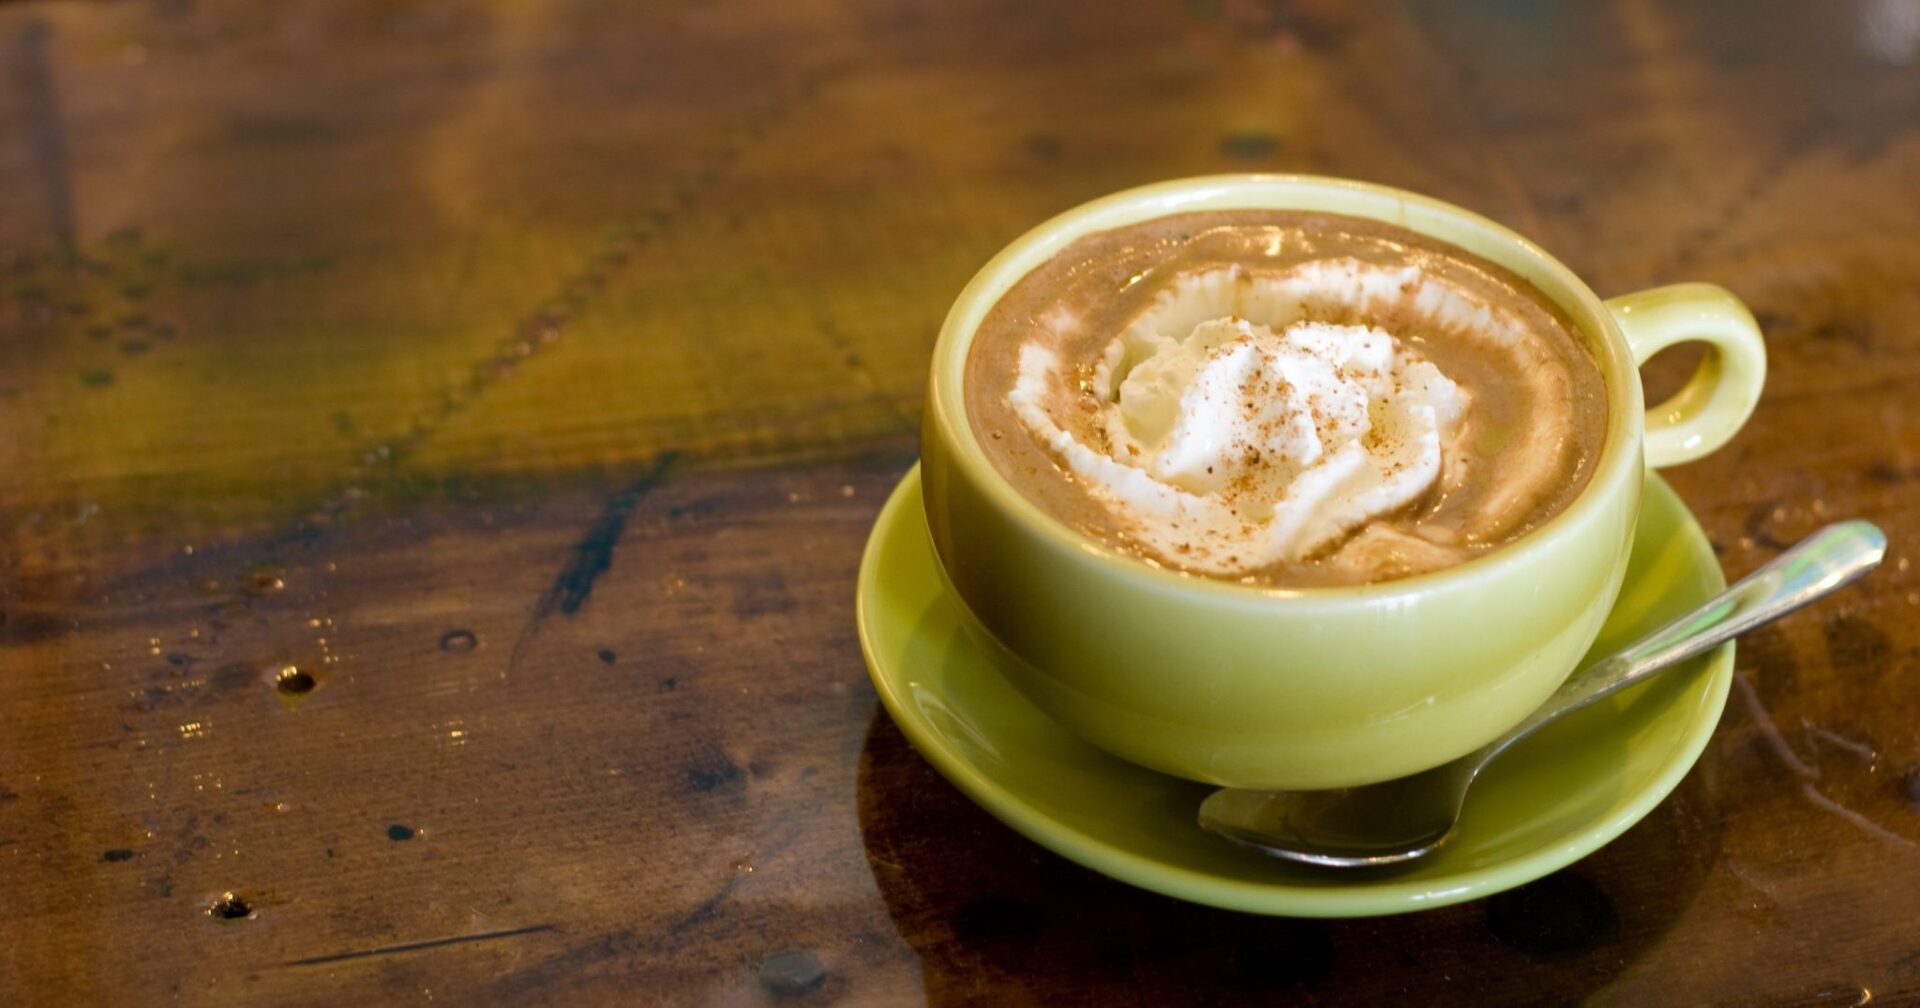 Starbucks Pumpkin Spice Latte K-Cup Coming!